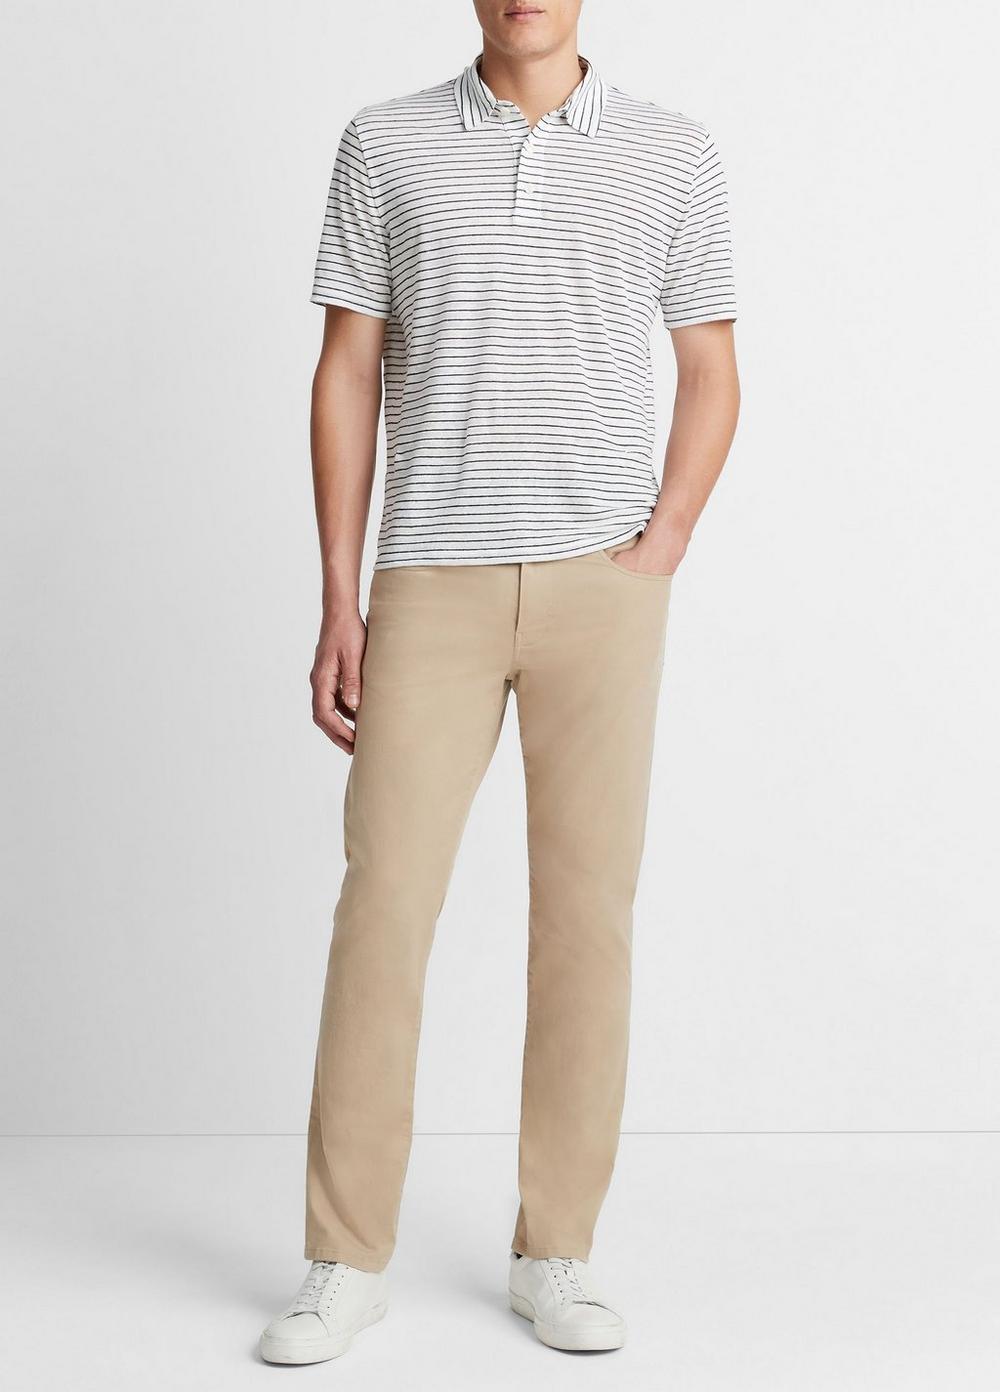 Striped Linen Short-Sleeve Polo Shirt, Optic White/coastal Blue, Size L Vince